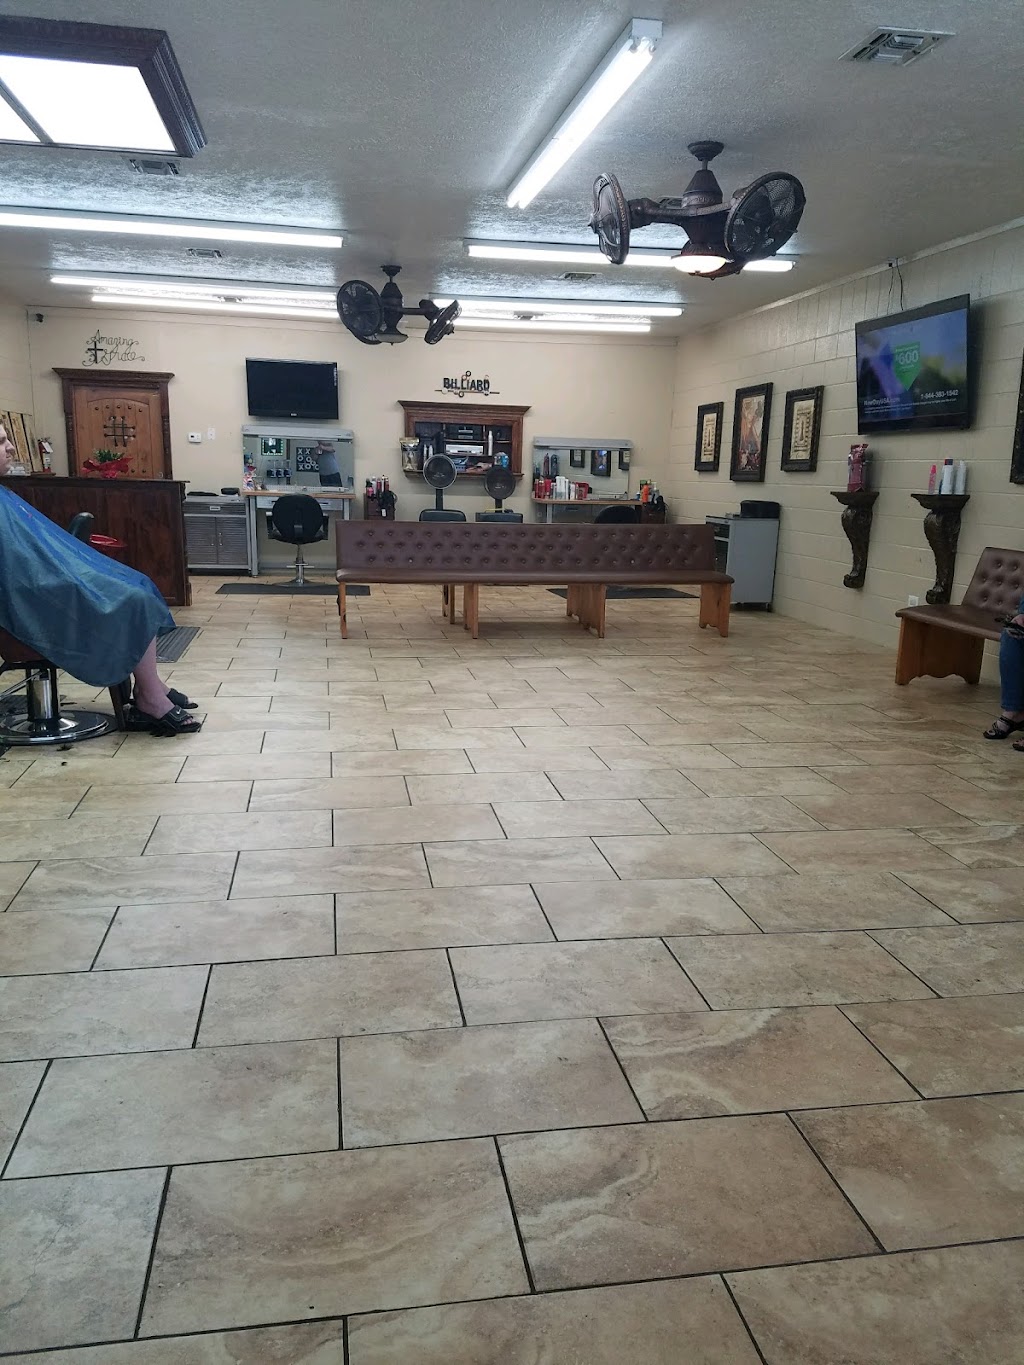 Clip & Fades Barber Shop | 201 N 12th St, Kingsville, TX 78363, USA | Phone: (361) 592-6016